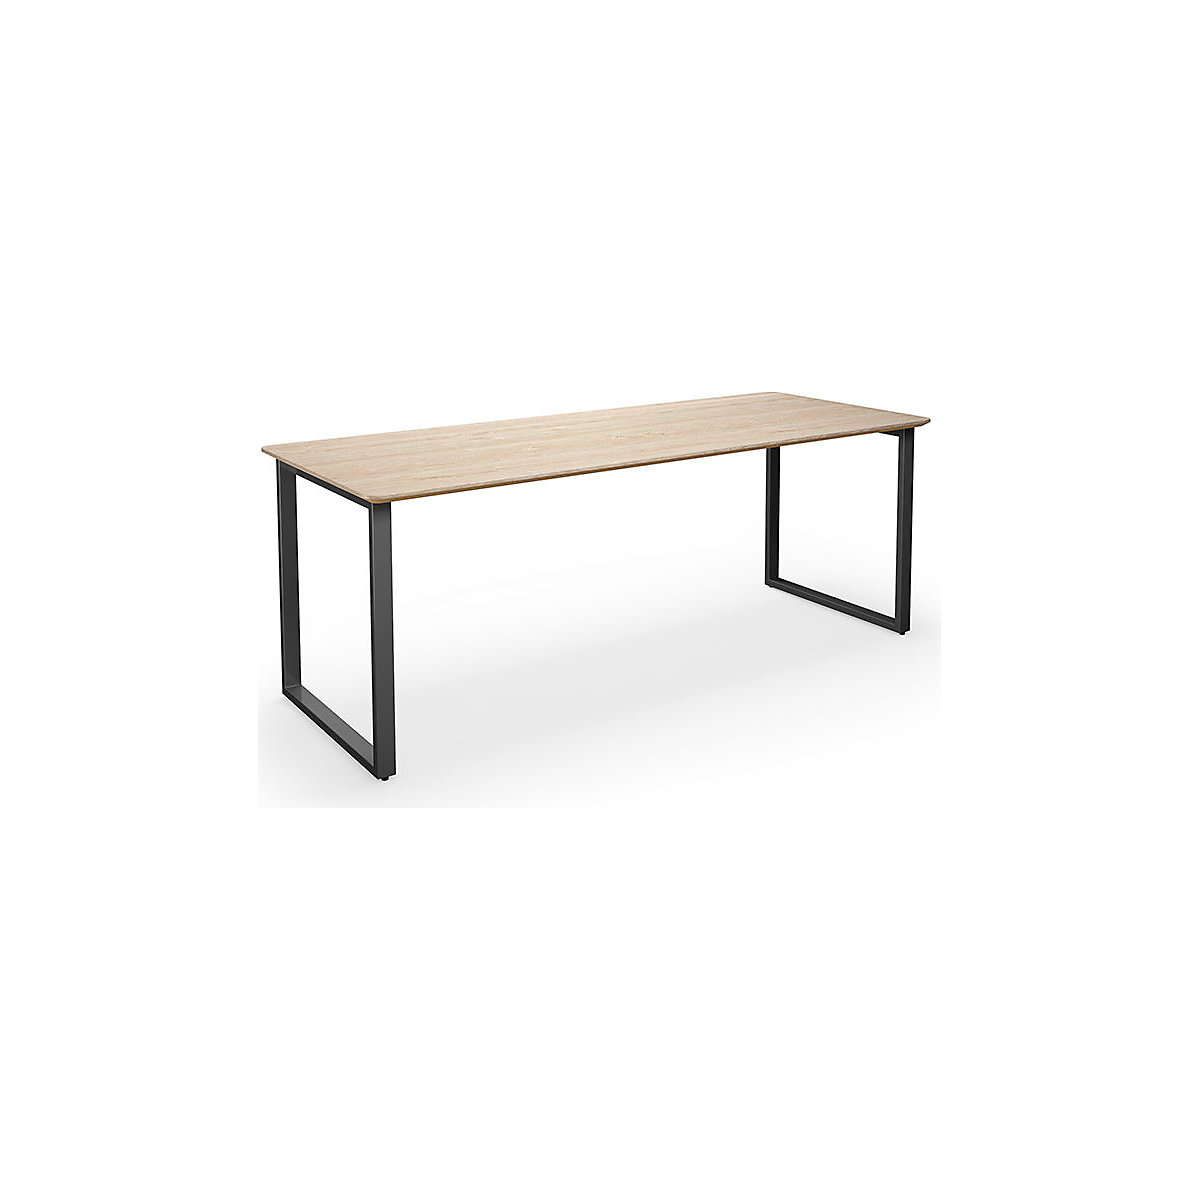 DUO-O Trend multi-purpose desk, straight tabletop, rounded corners, WxD 1800 x 800 mm, oak, black-5